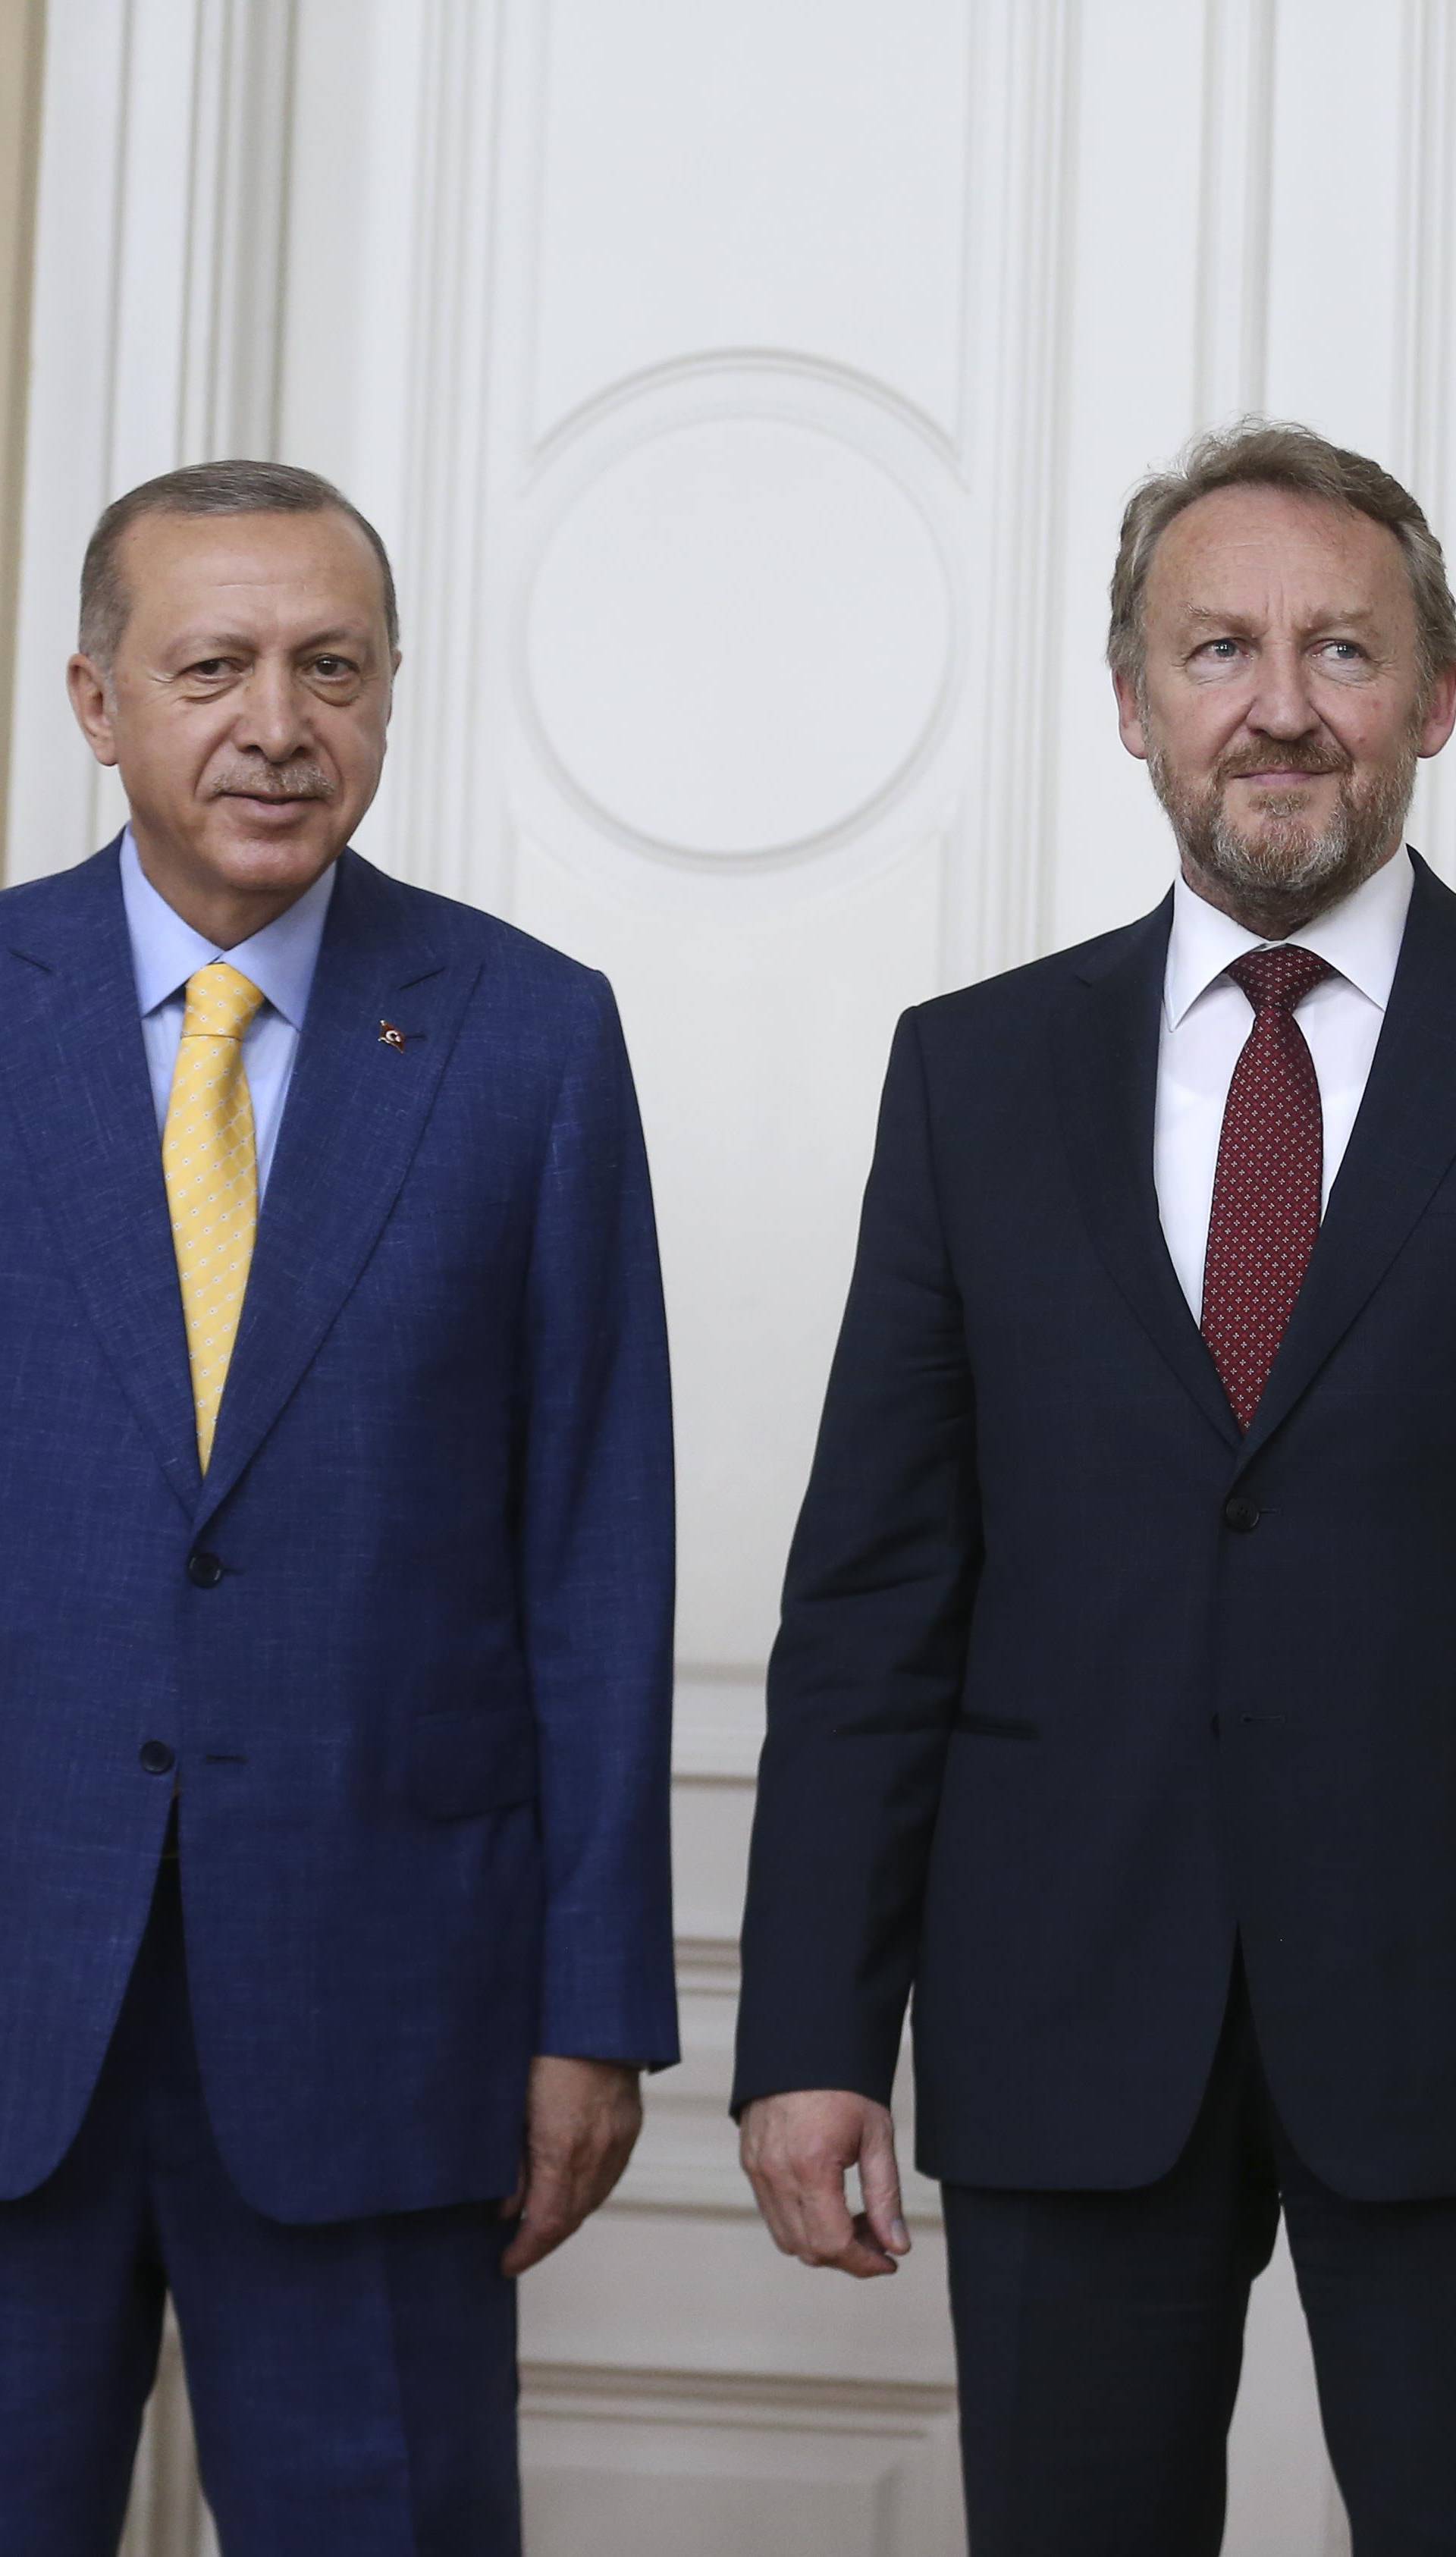 Turkish President Erdogan meets with Chairman of the Tripartite Presidency of Bosnia and Herzegovina Izetbegovic in Sarajevo